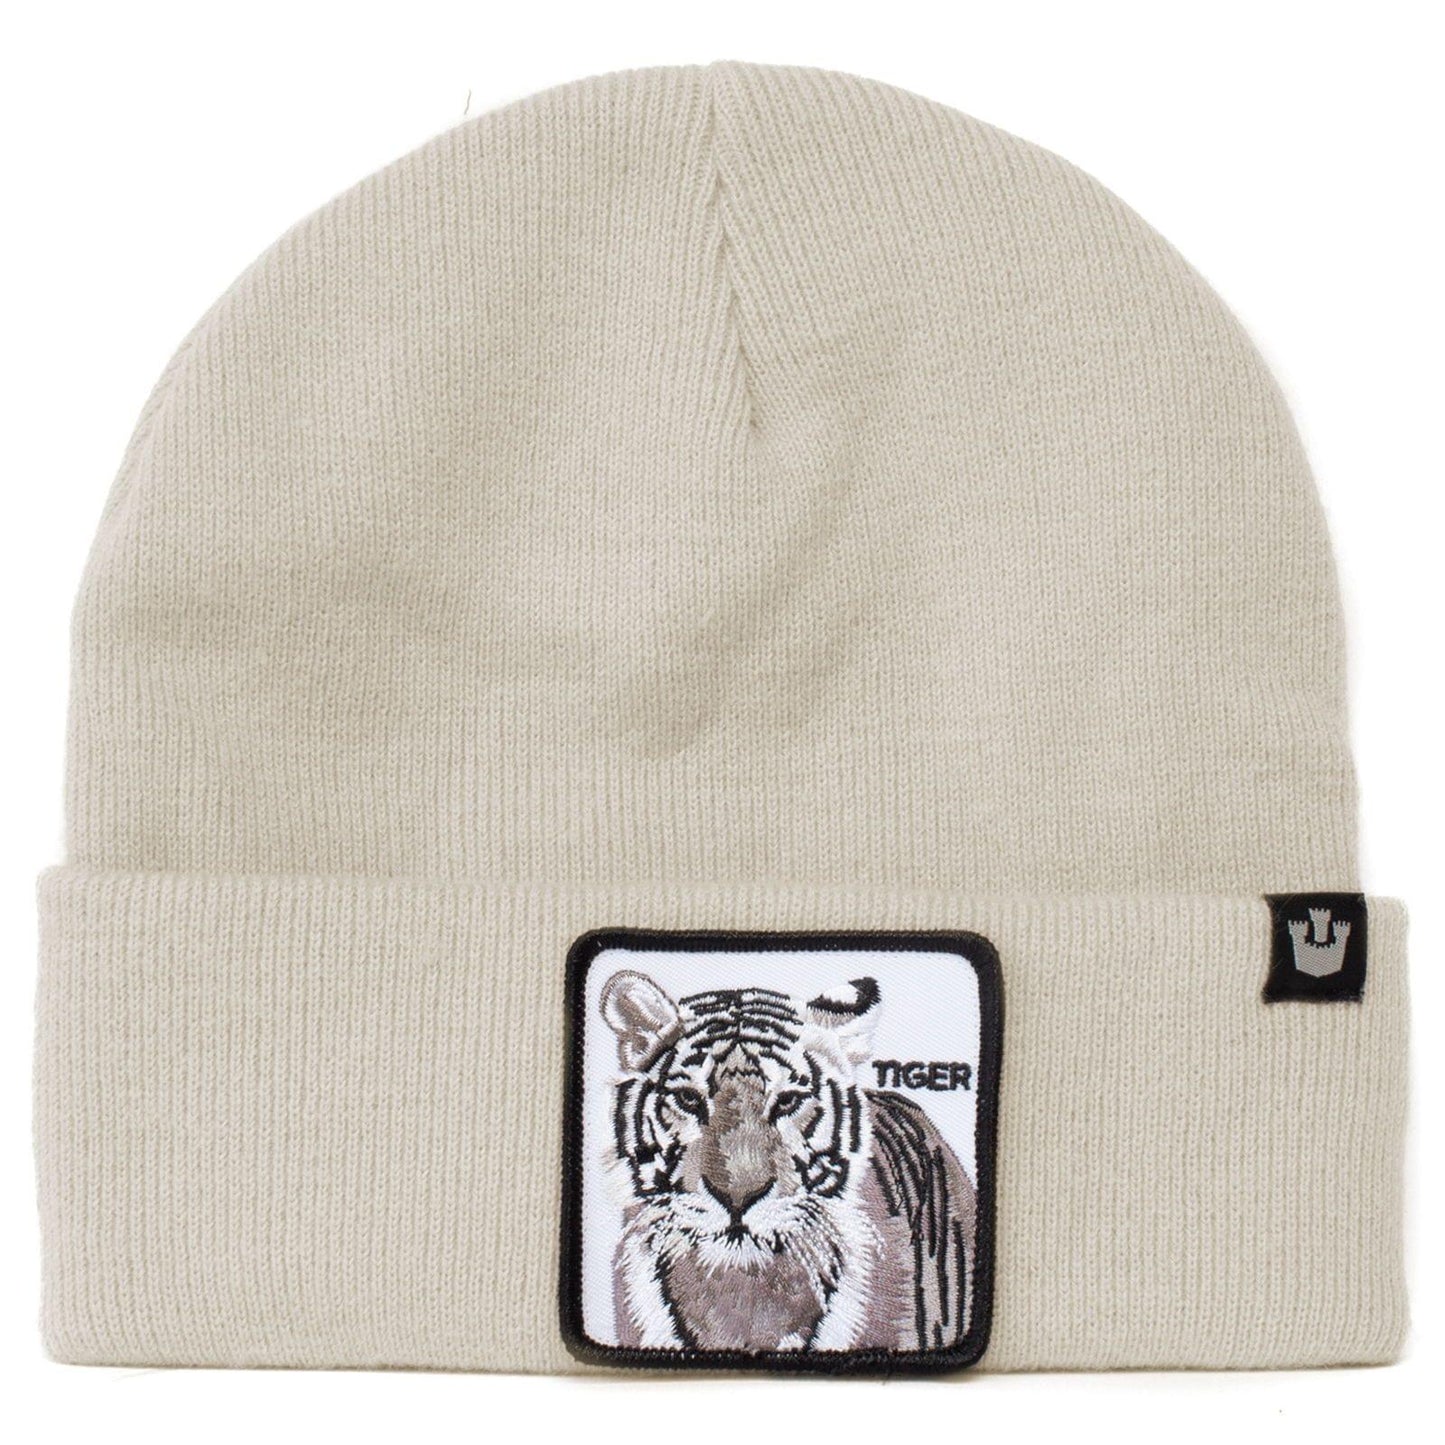 Goorin Bros Hot Tiger Winter Cap in White, Tiger